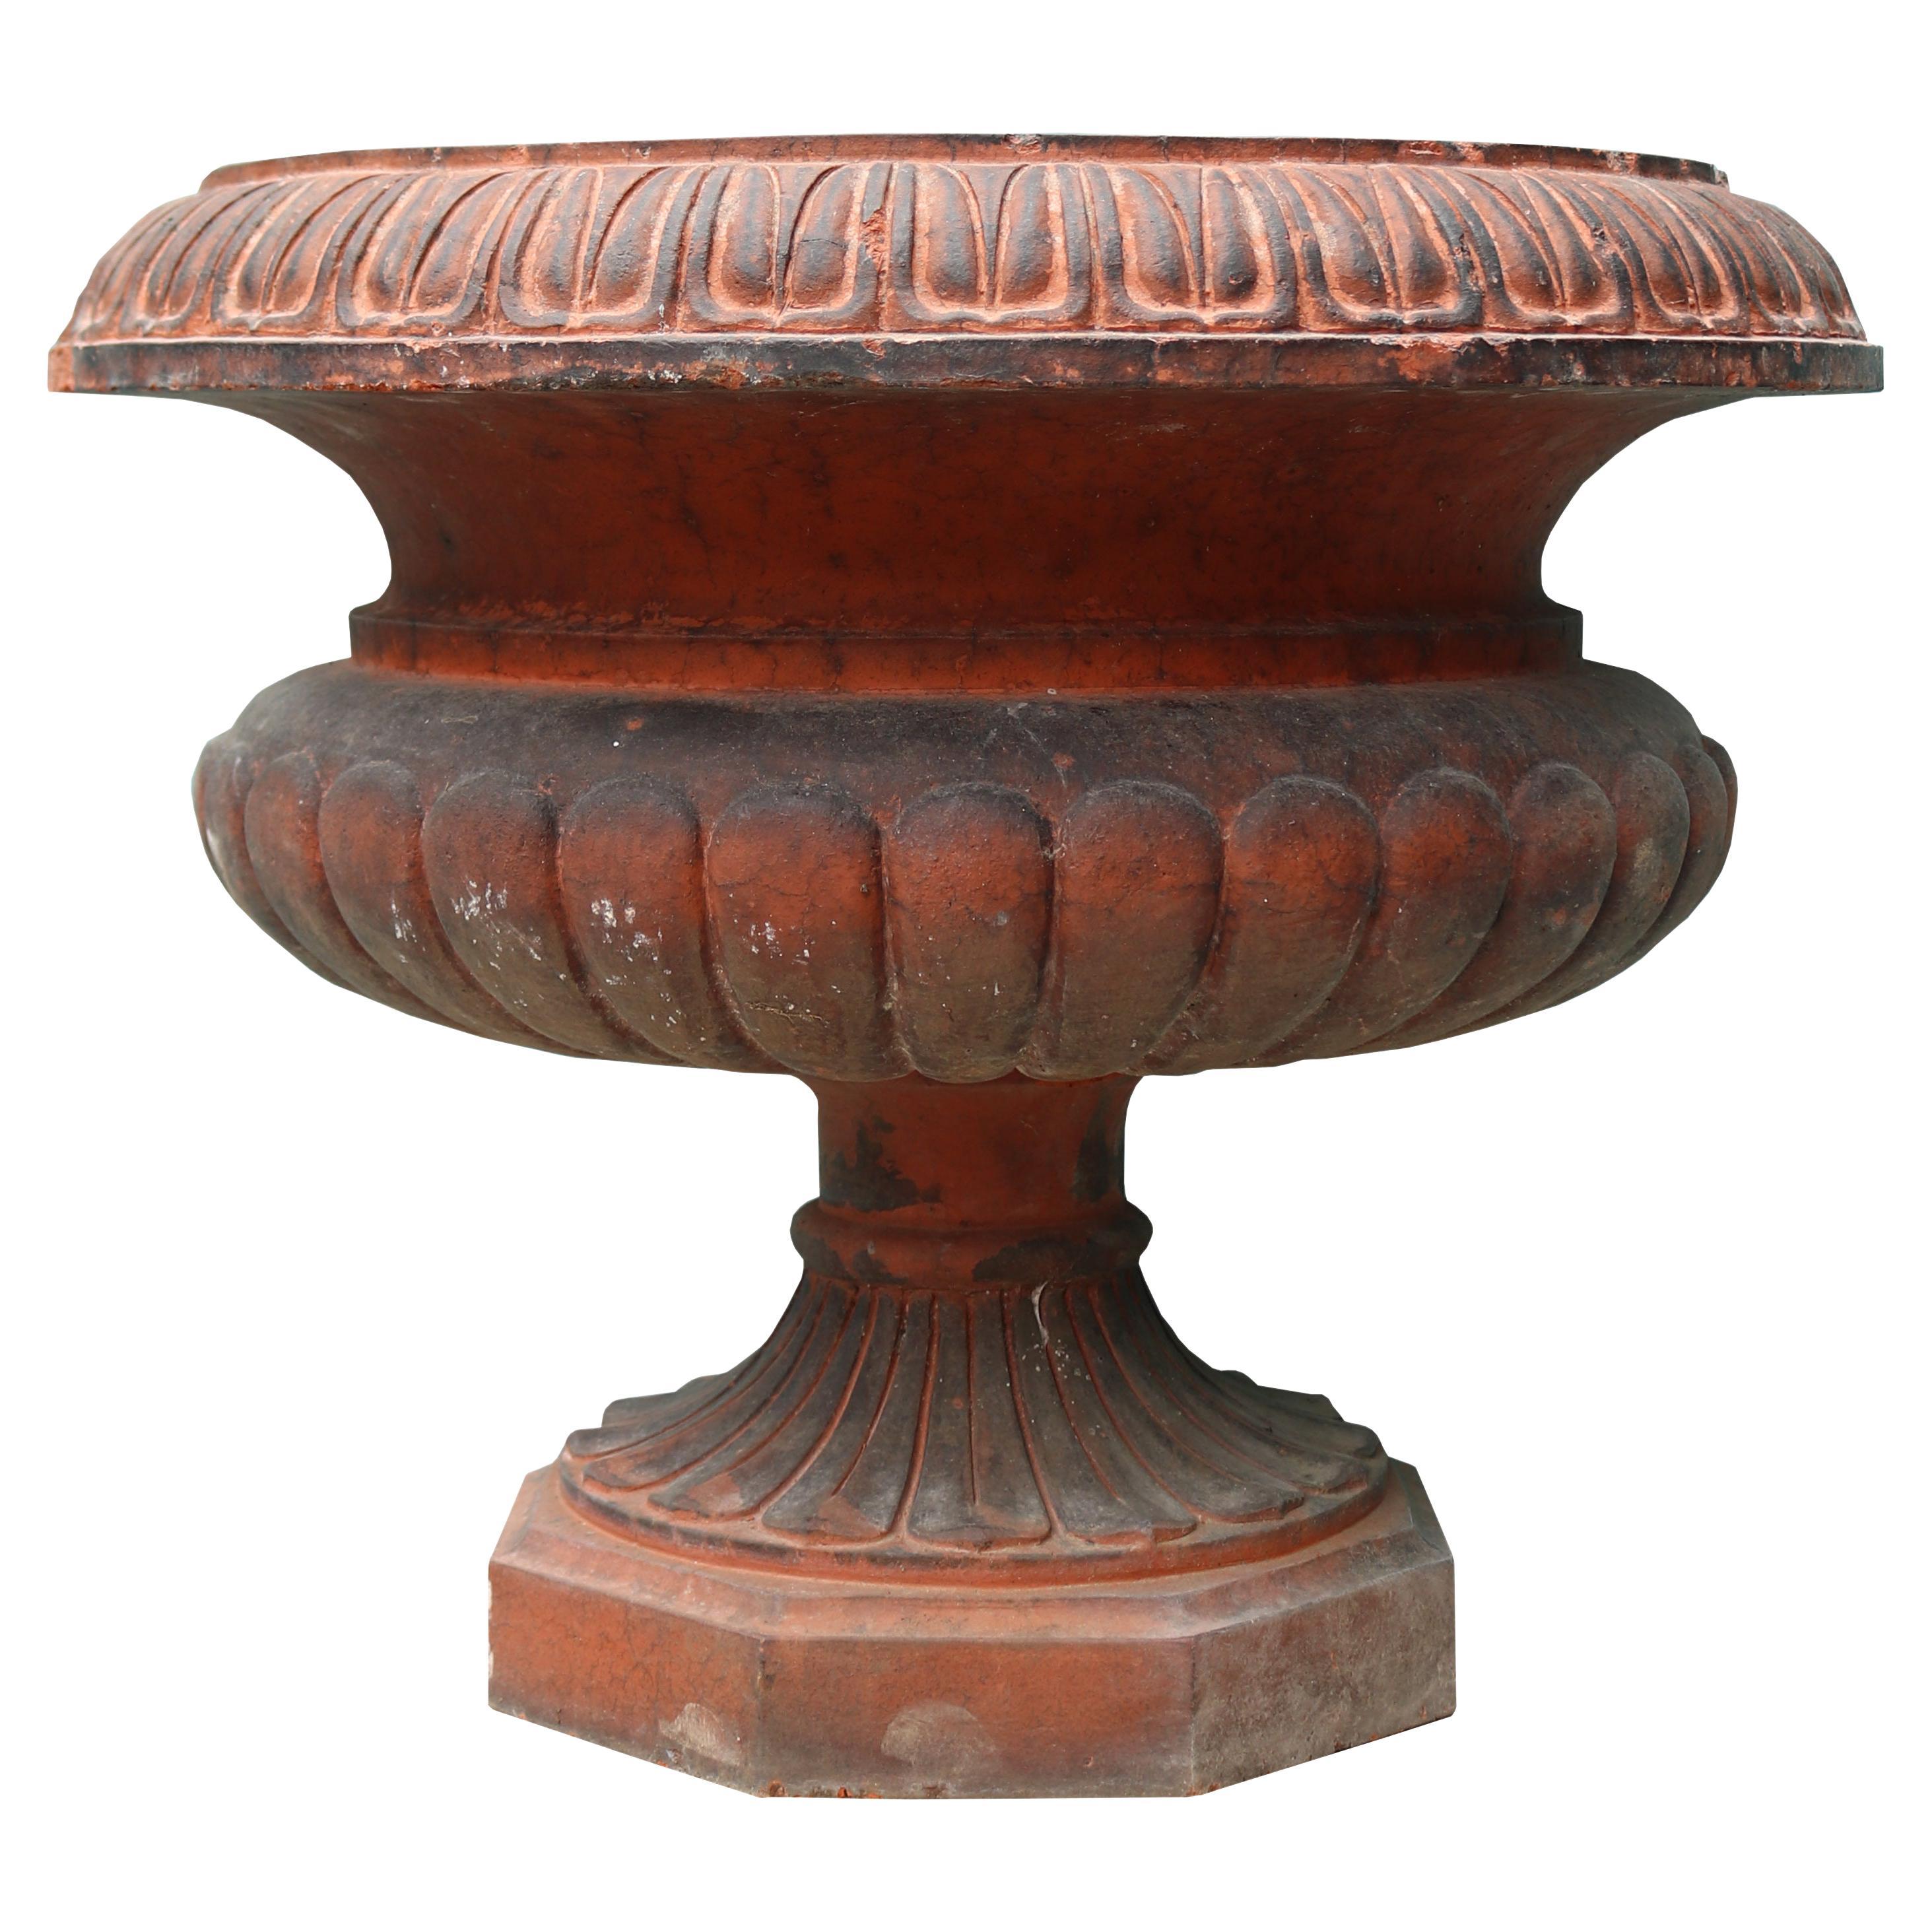 Ancienne urne de jardin en terre cuite de style victorien